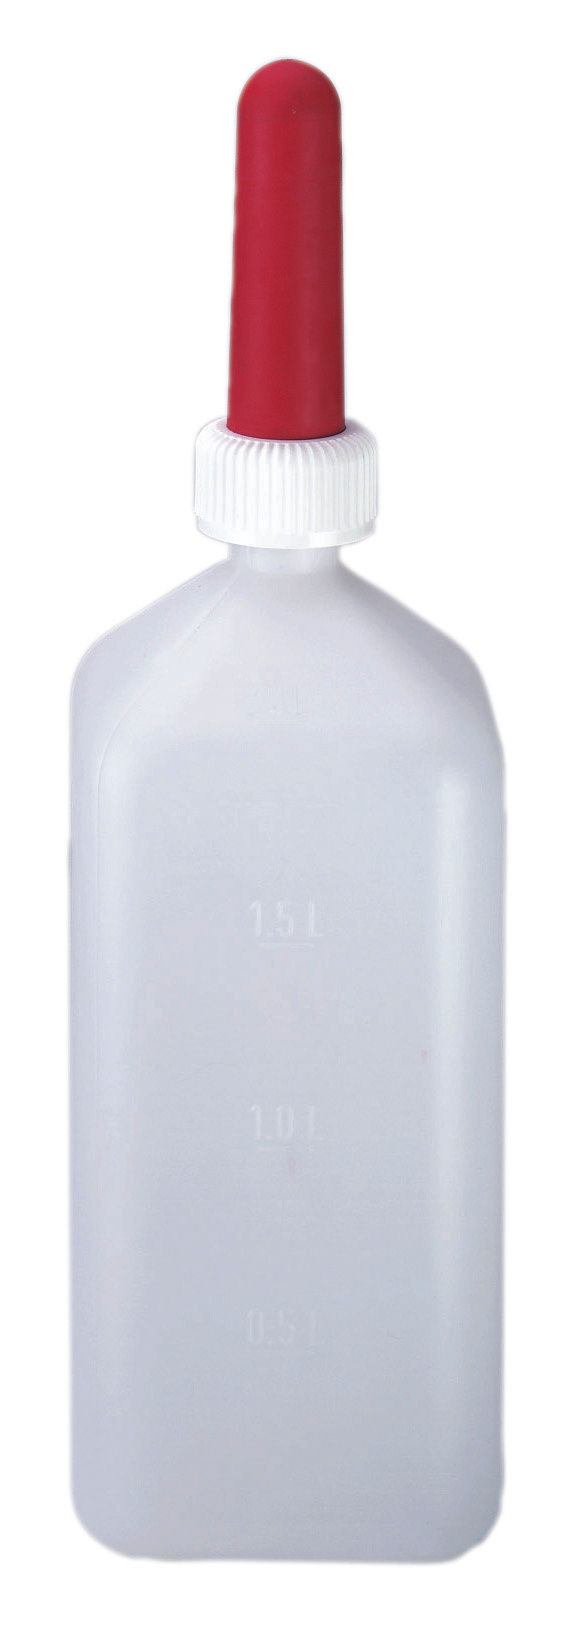 Kälber-Tränkflasche mit Sauger 2 Liter